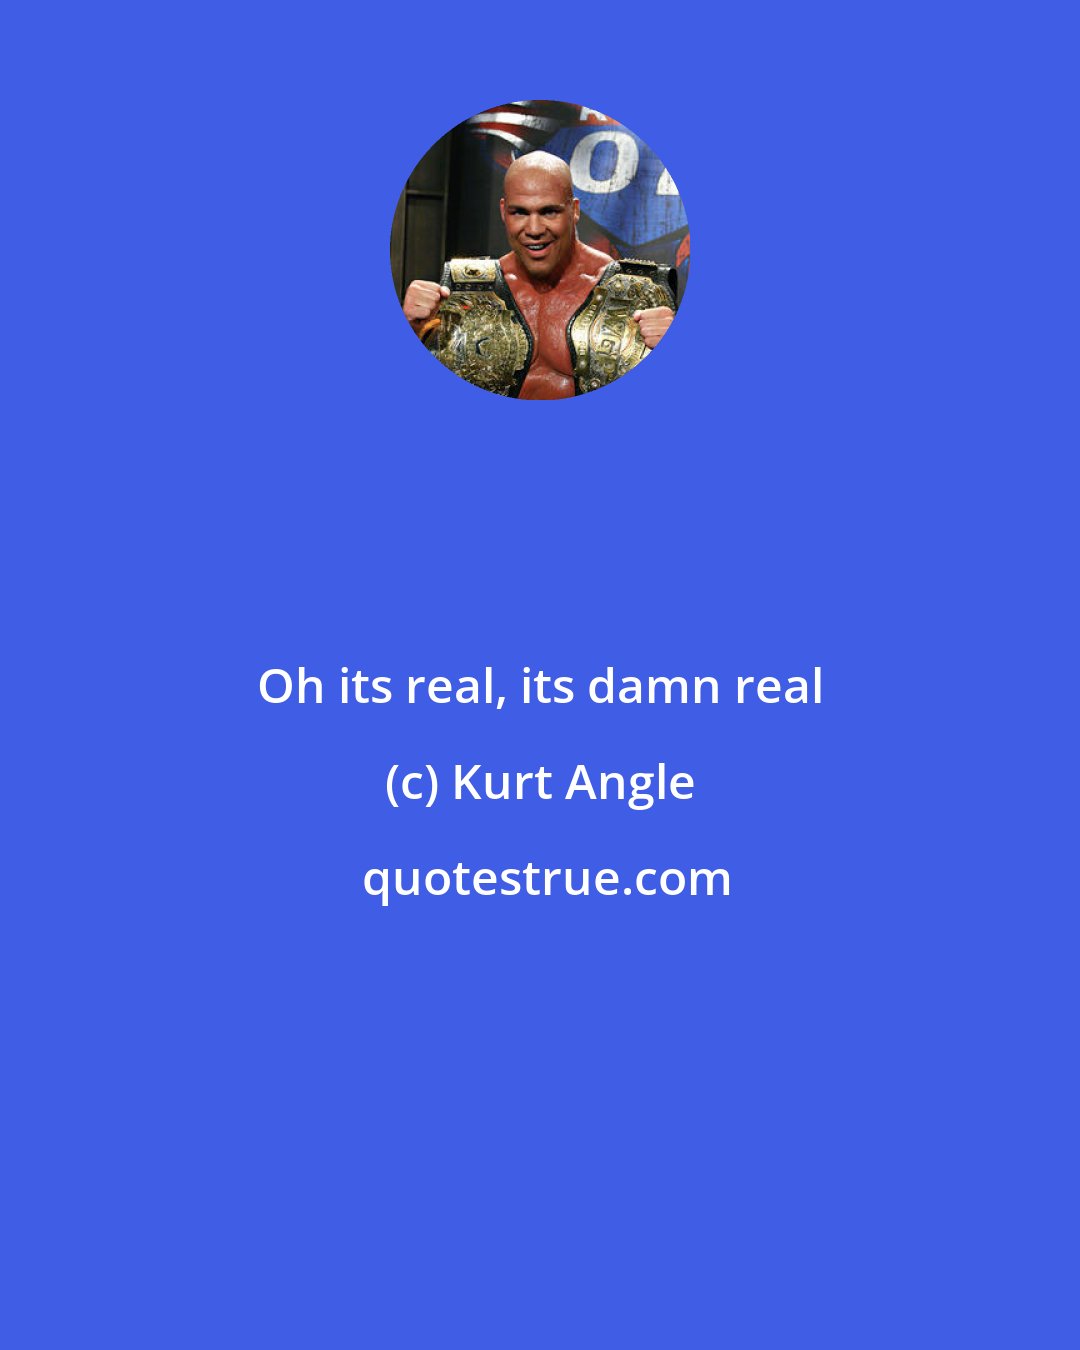 Kurt Angle: Oh its real, its damn real